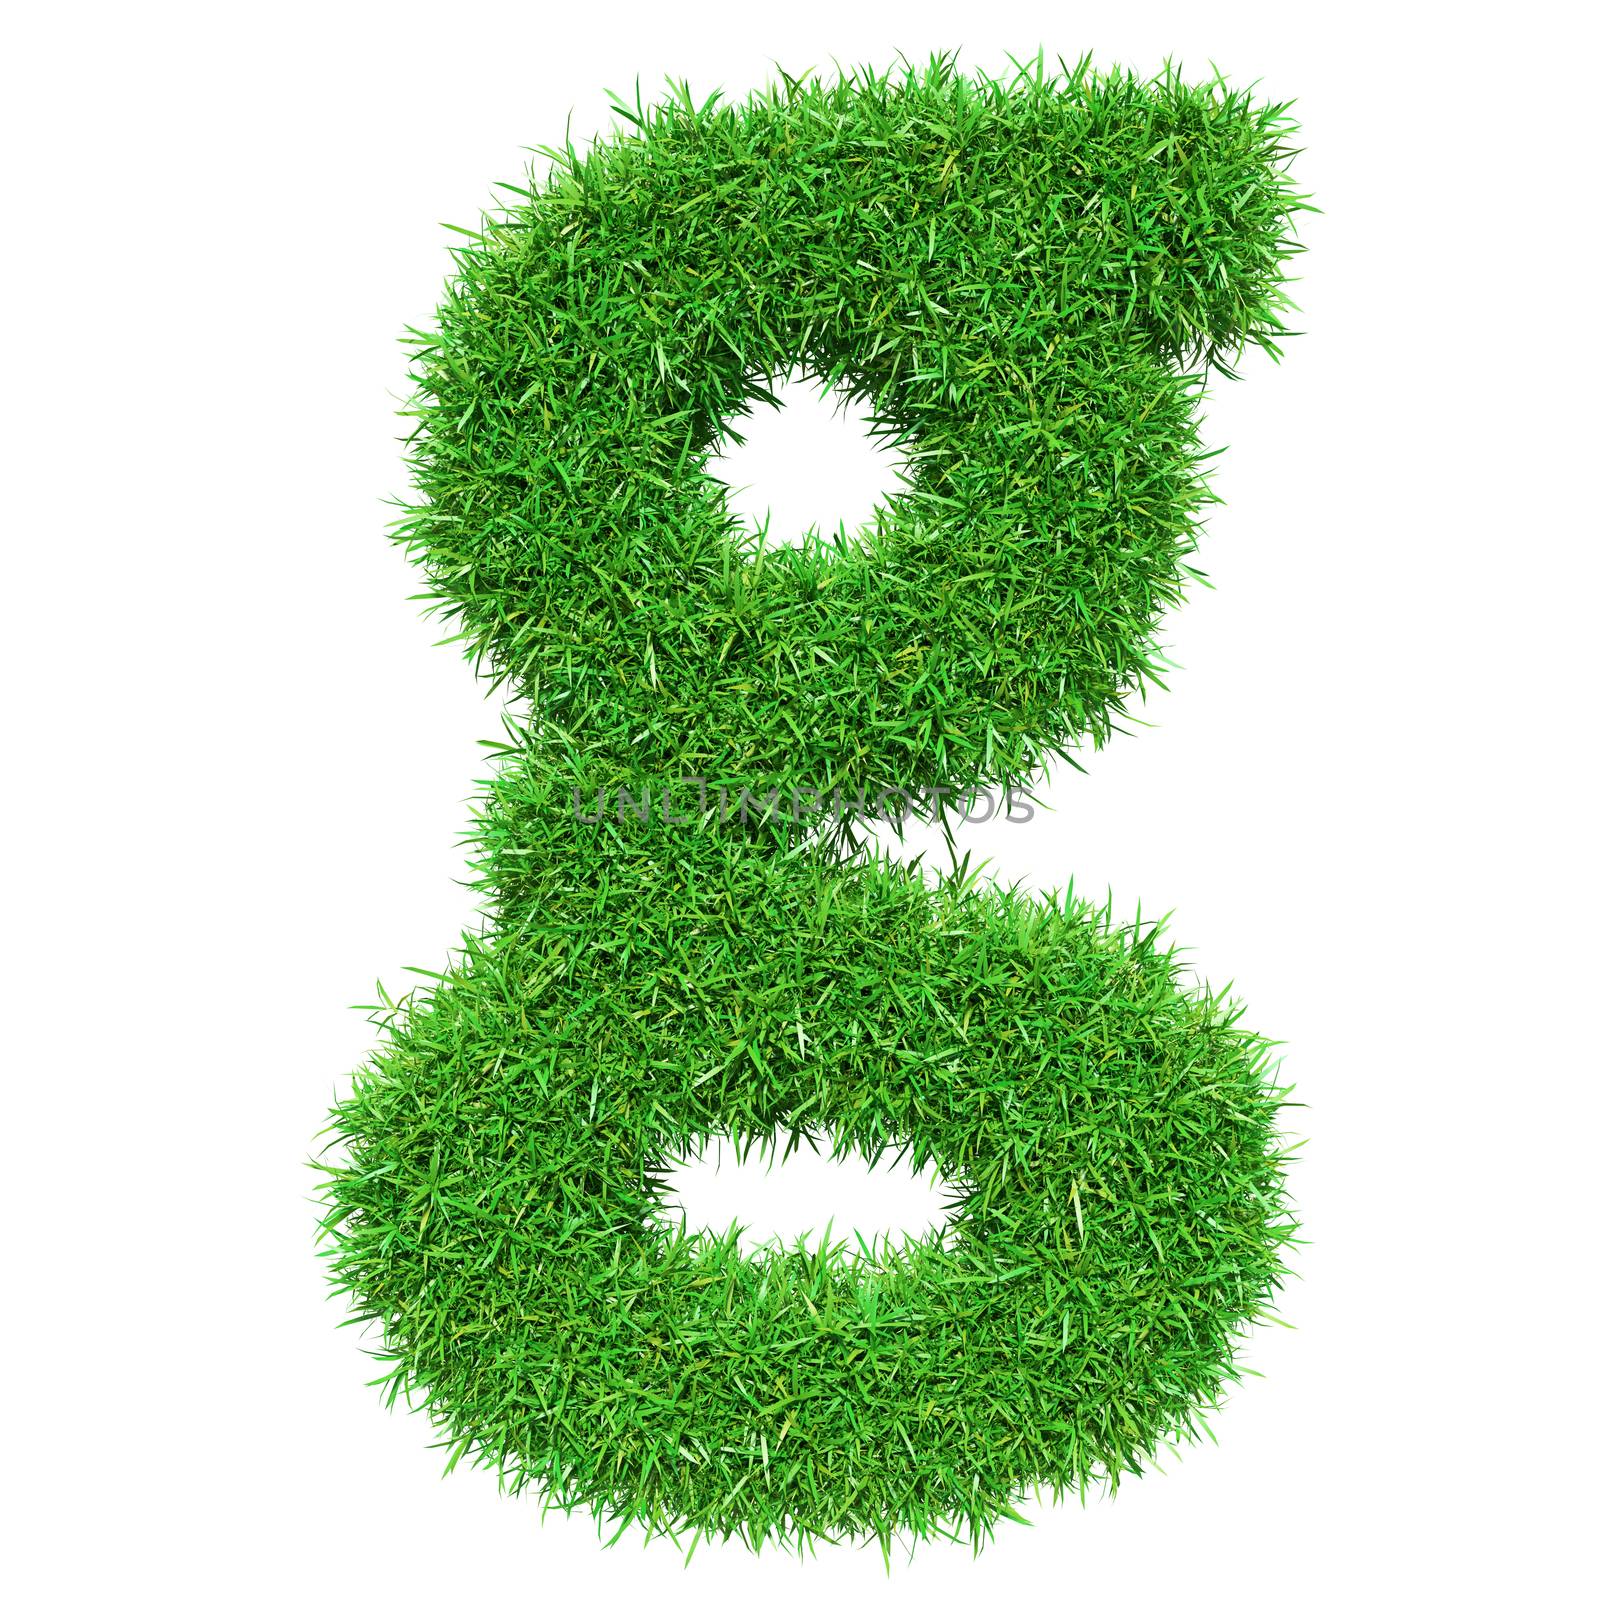 Green Grass Letter G. Isolated On White Background. Font For Your Design. 3D Illustration